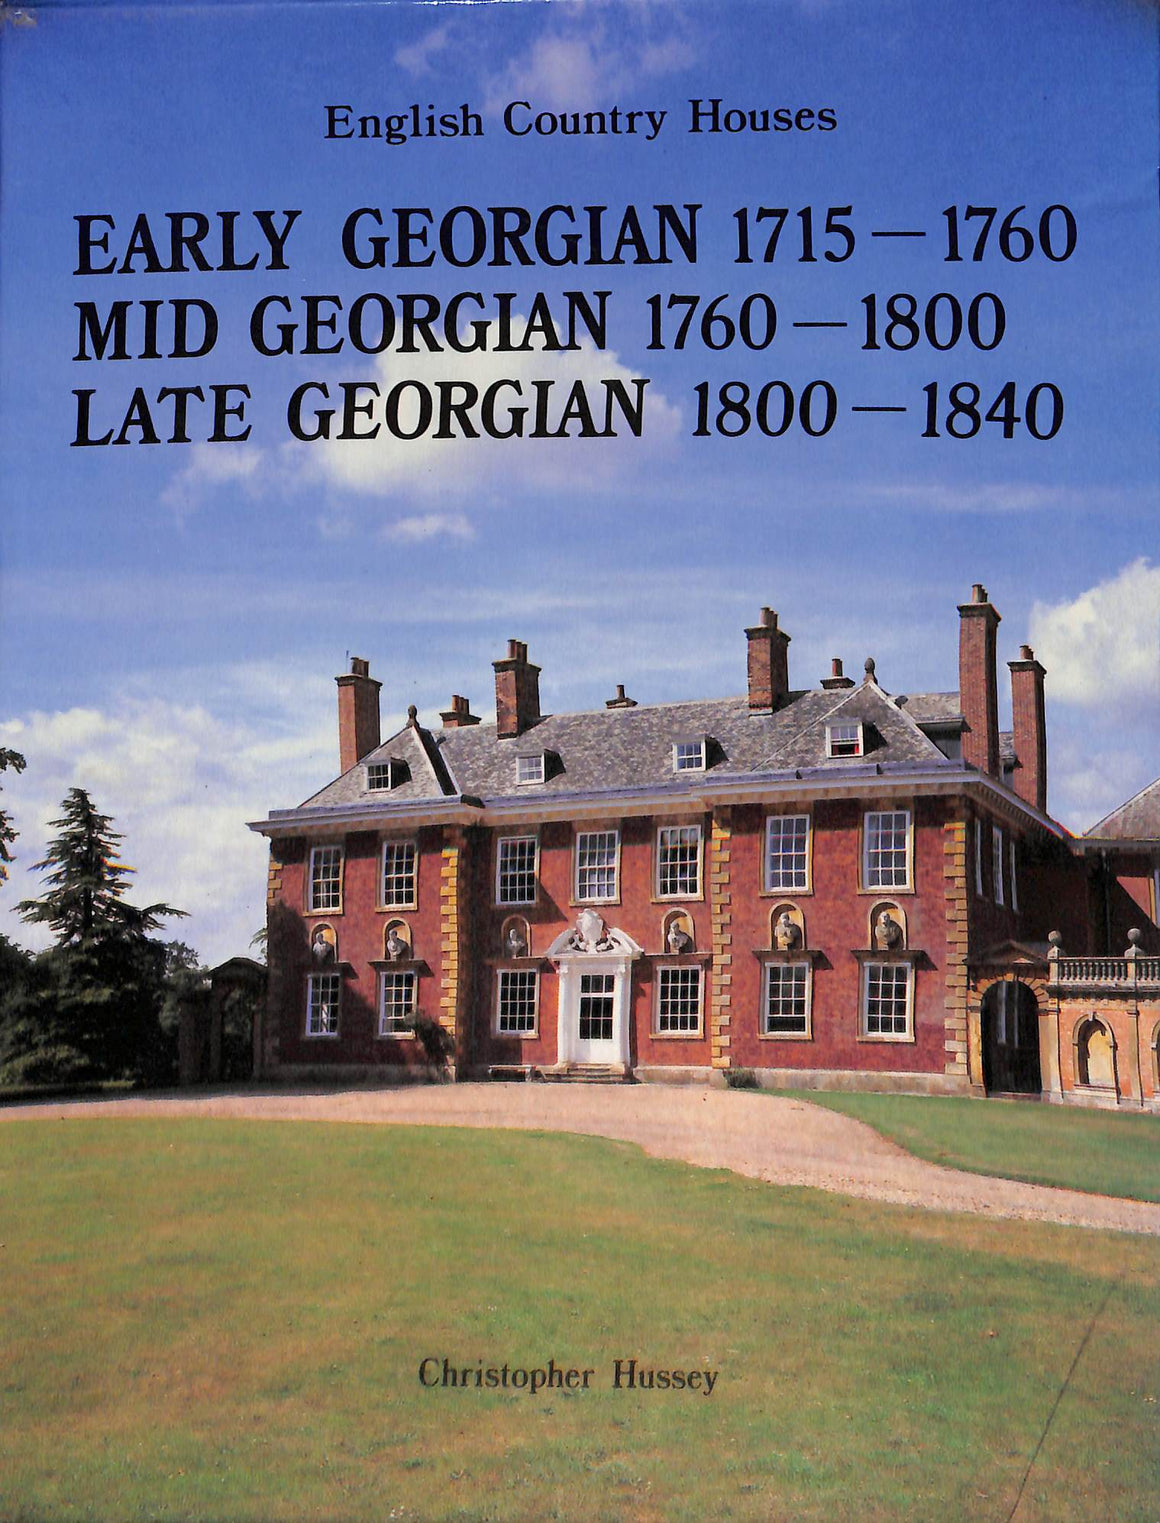 English Country Houses: 3 Vol Early Georgian 1715-1760, Mid Georgian 1760-1800, & Late Georgian 1800-1840 (SOLD)